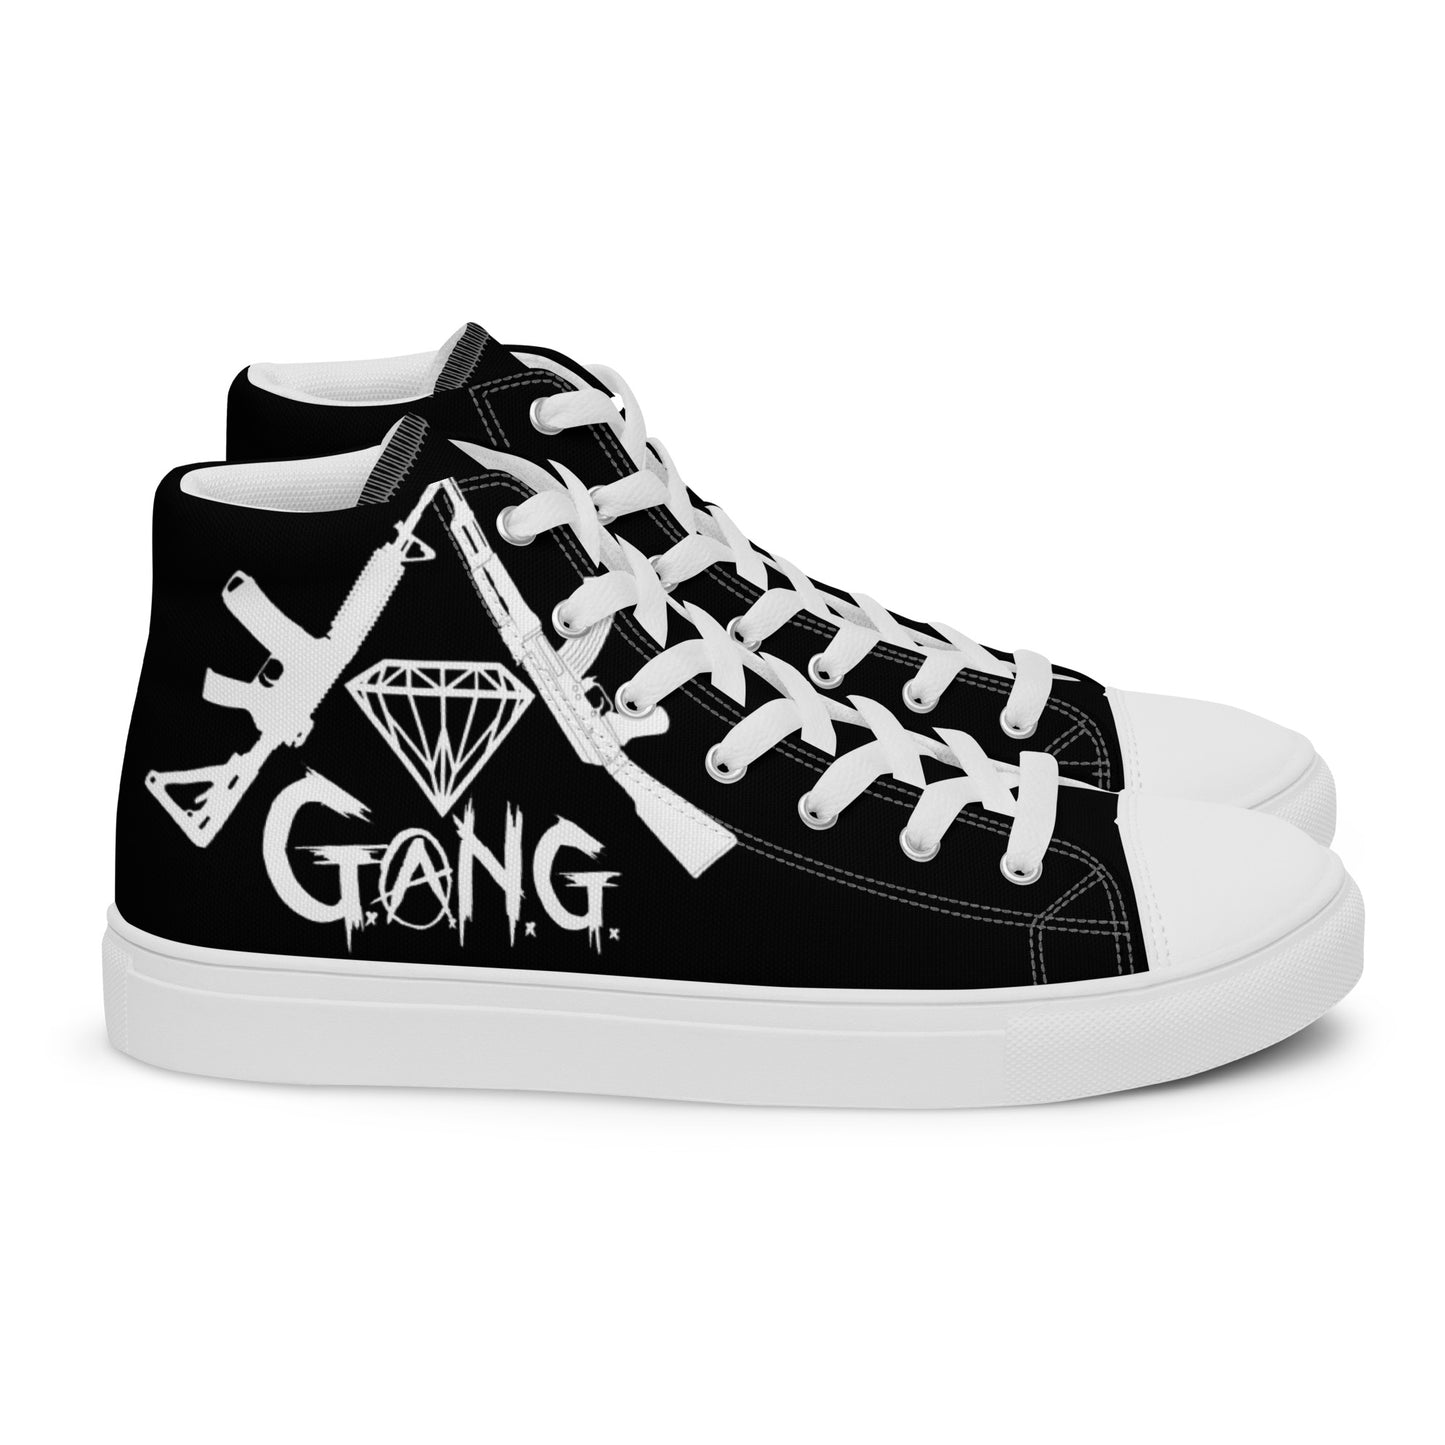 Diamond G.A.N.G. High Top Shoes